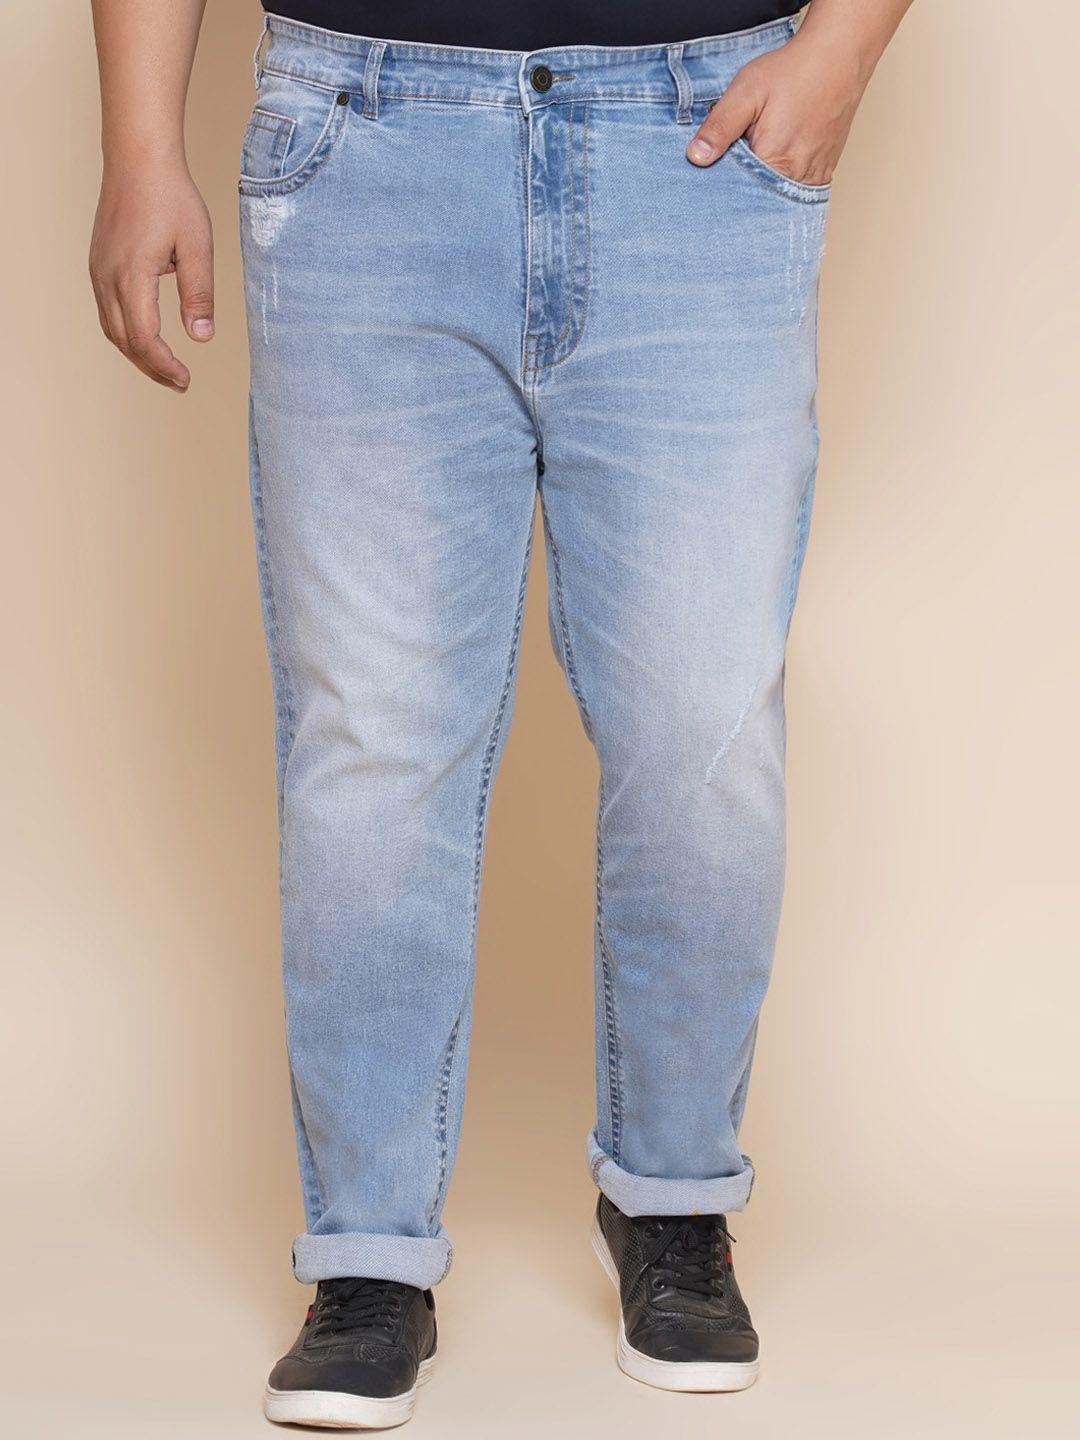 john-pride-men-plus-size-regular-fit-low-distress-heavy-fade-stretchable-jeans